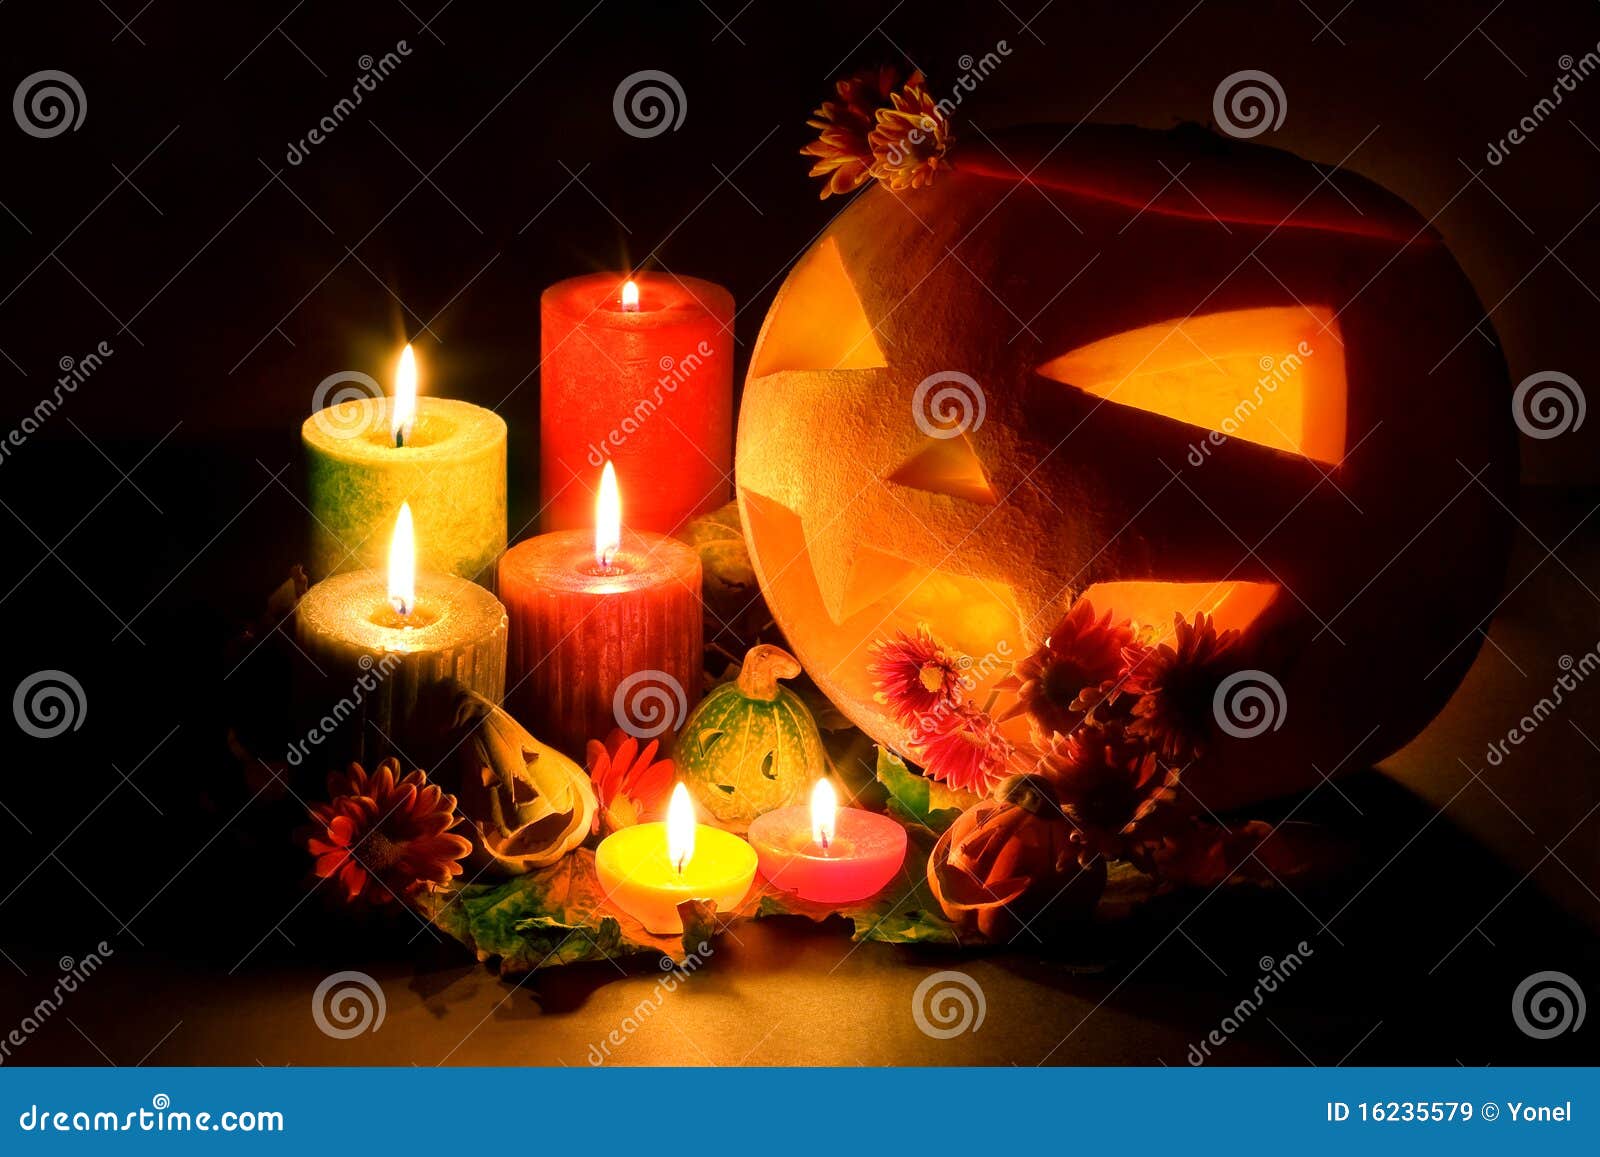 Halloween Pumpkin, Still Life. Stock Image - Image of glow, glowing ...